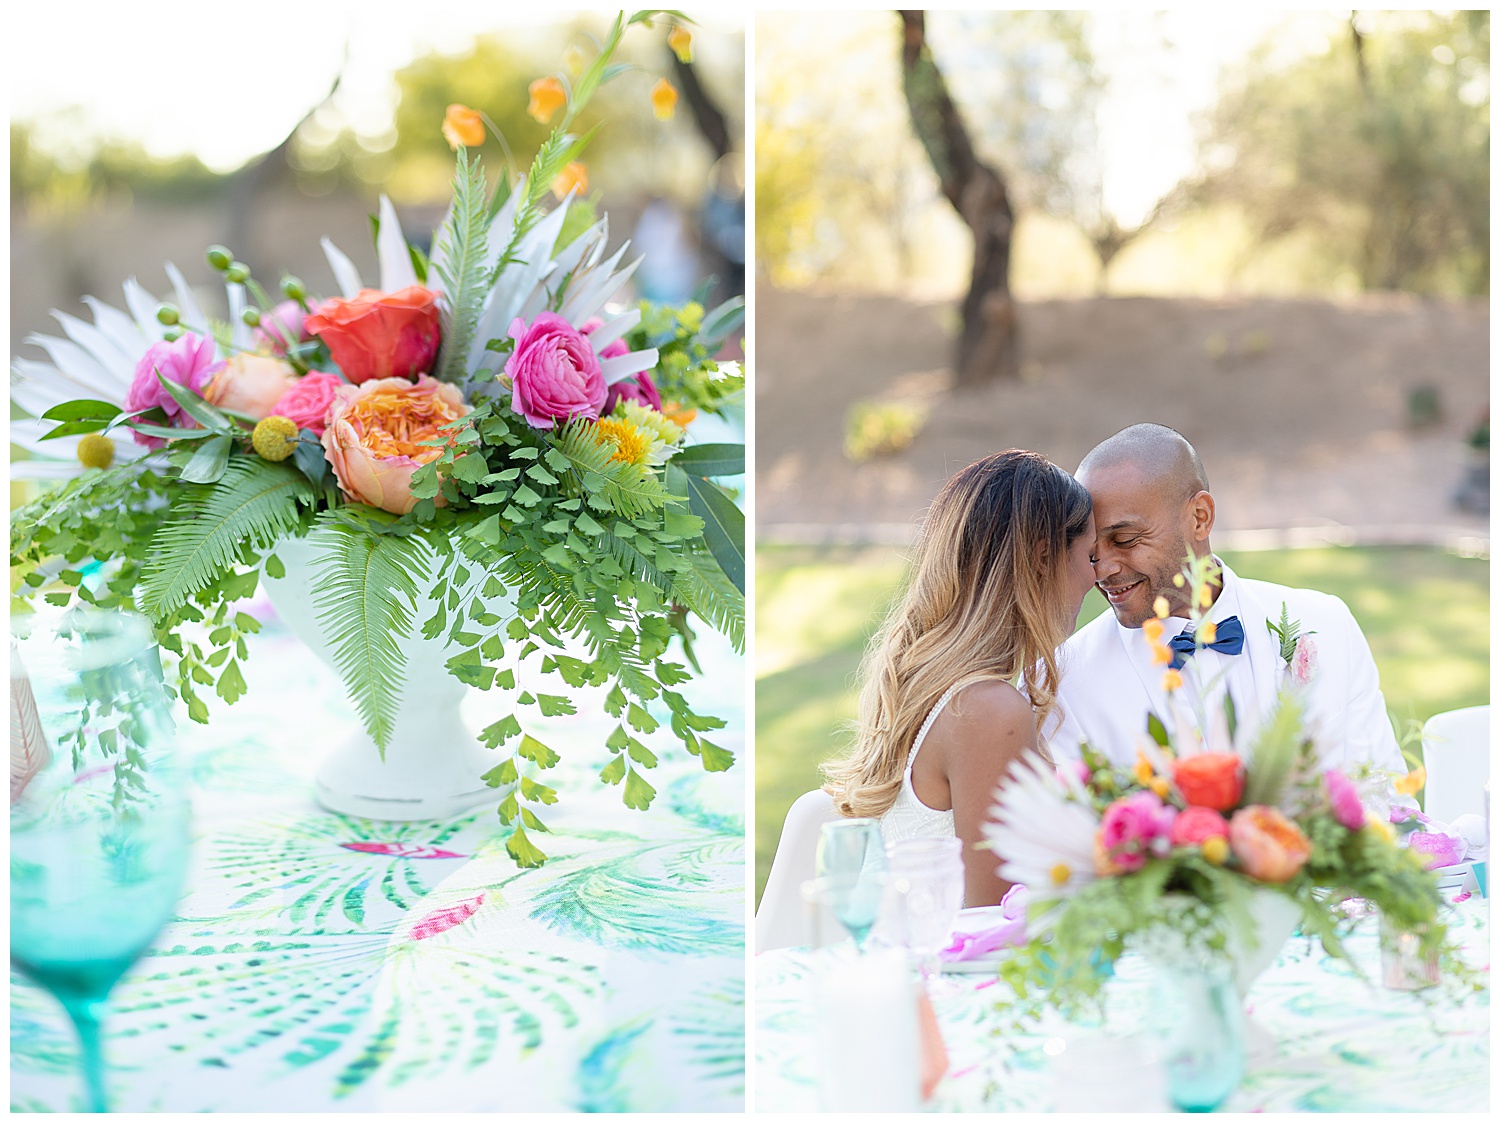 Colorful Palm Springs Inspired Wedding | Jade Alexandria Photography | Huntsville, Alabama Wedding Photographer